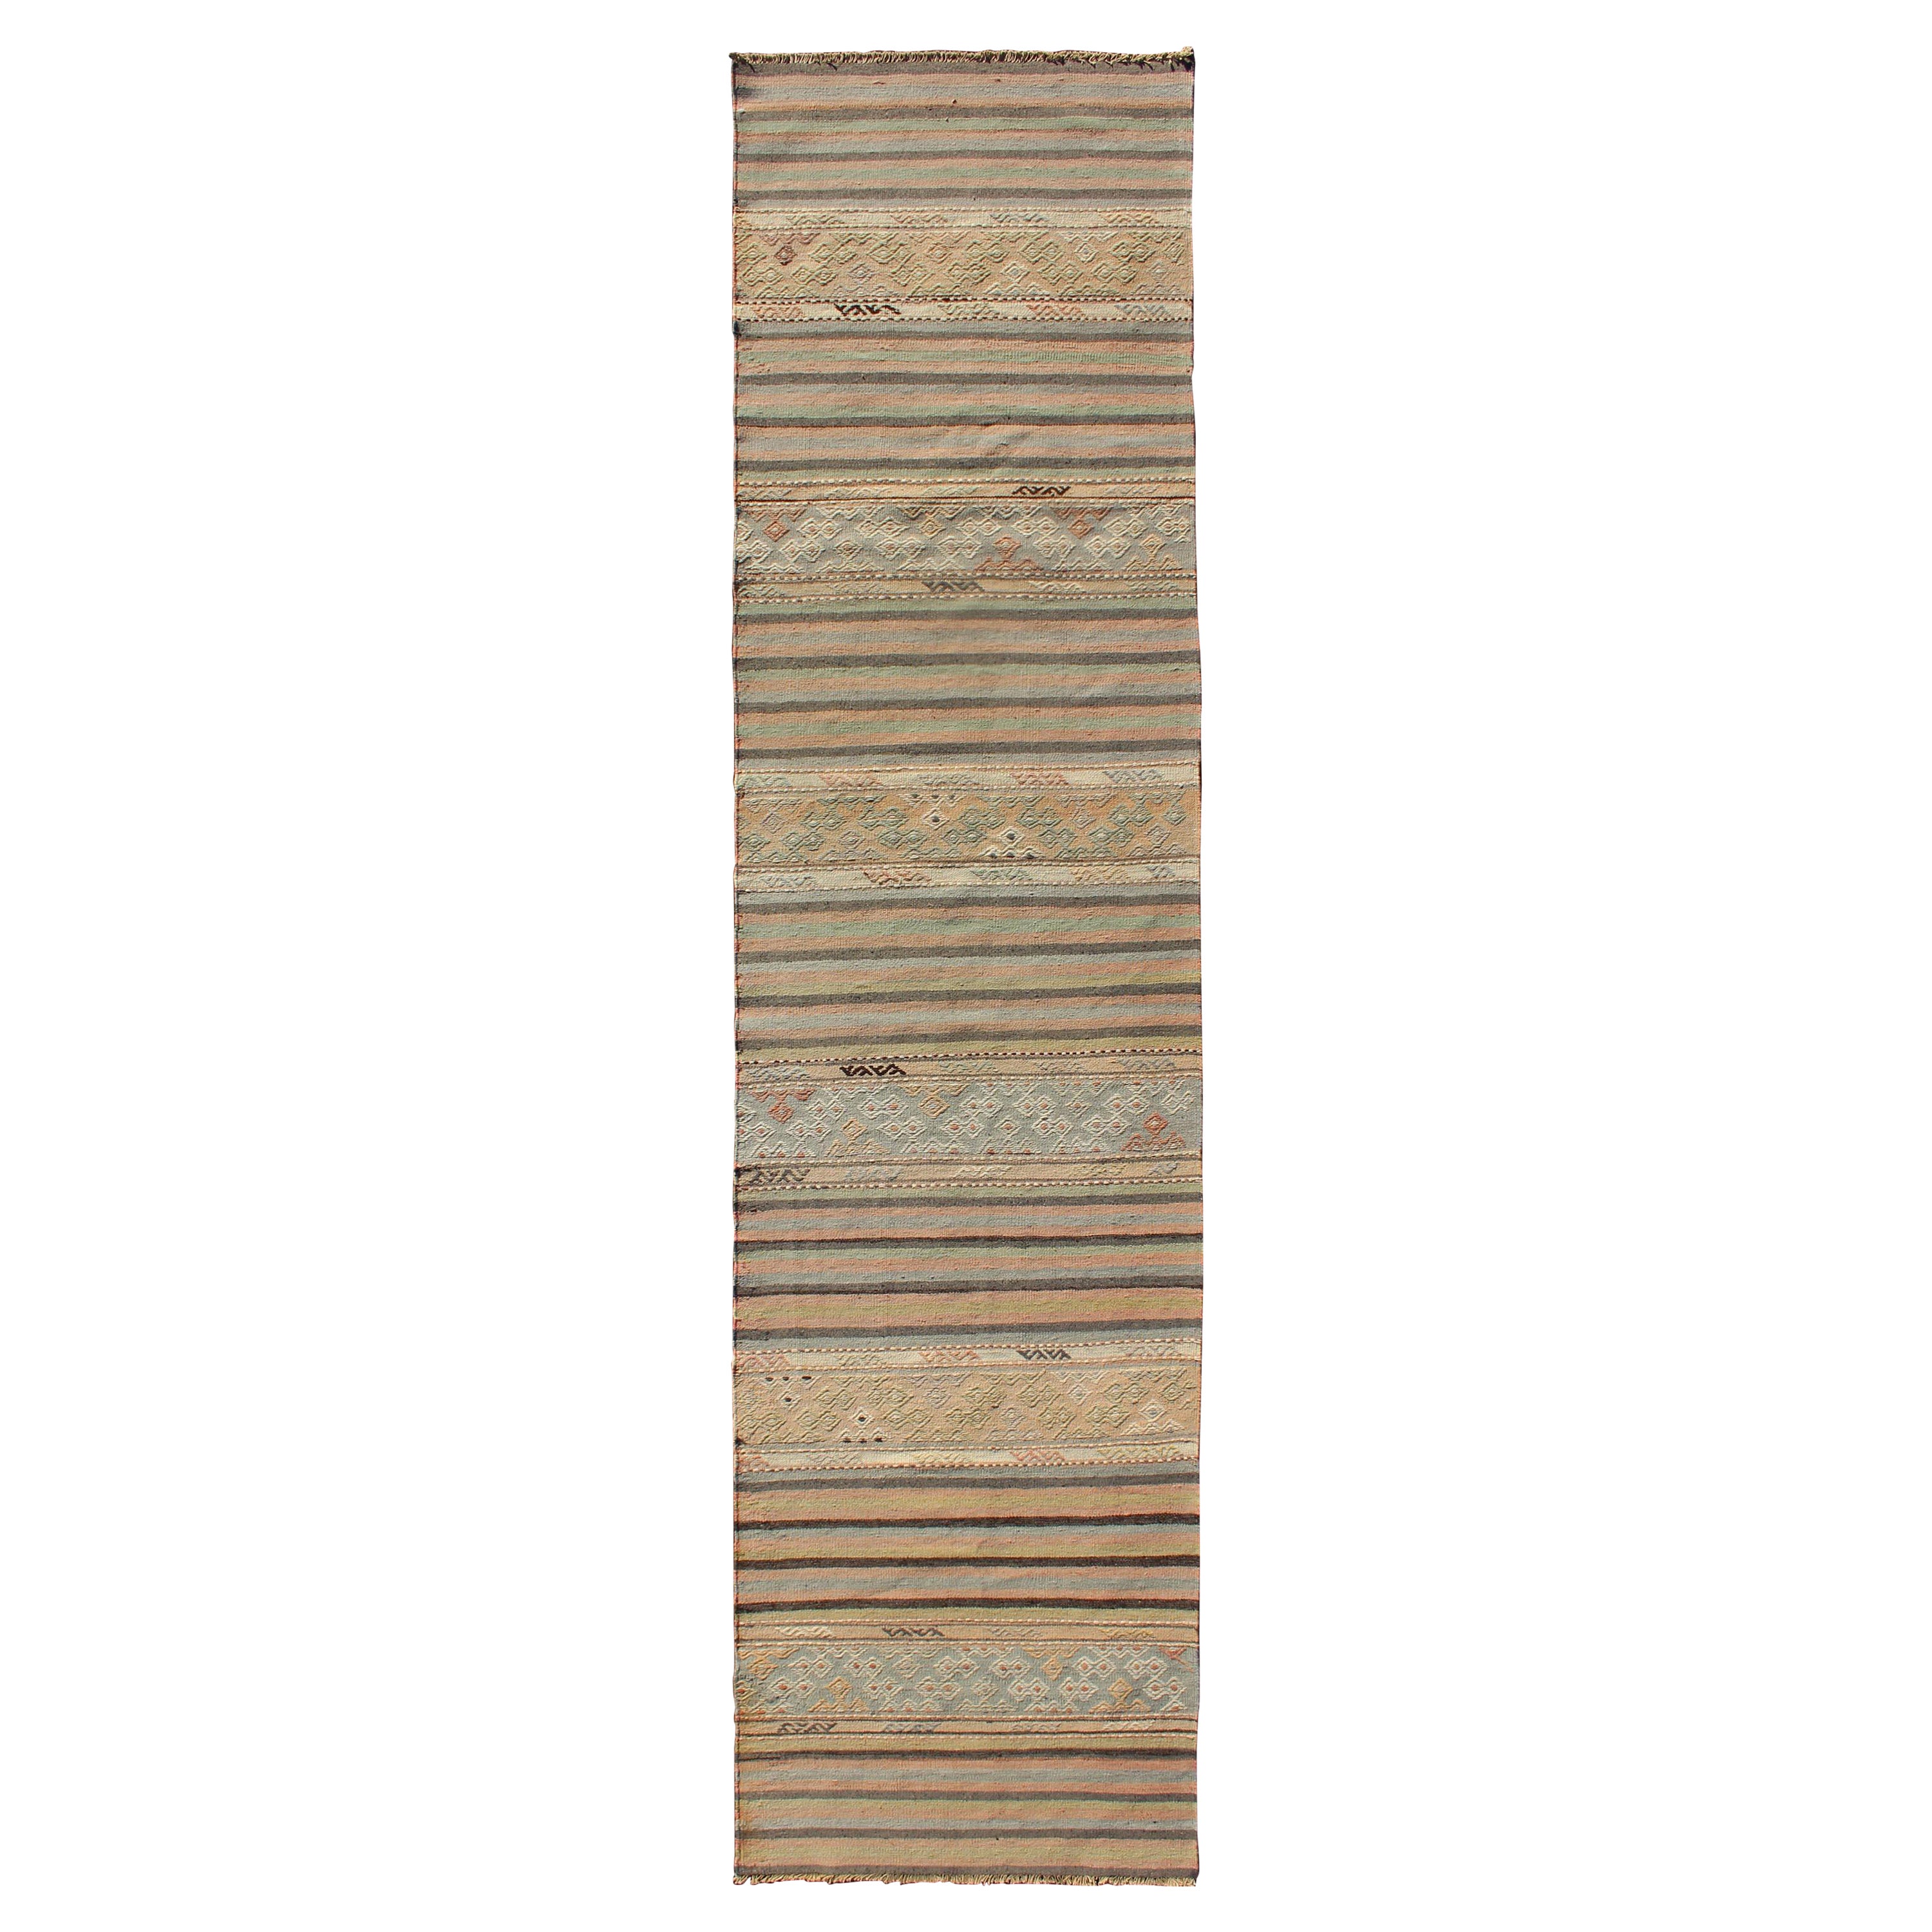 Stripe Vintage Turkish Kilim Flat-Weave Geometric Designed Runner For Sale